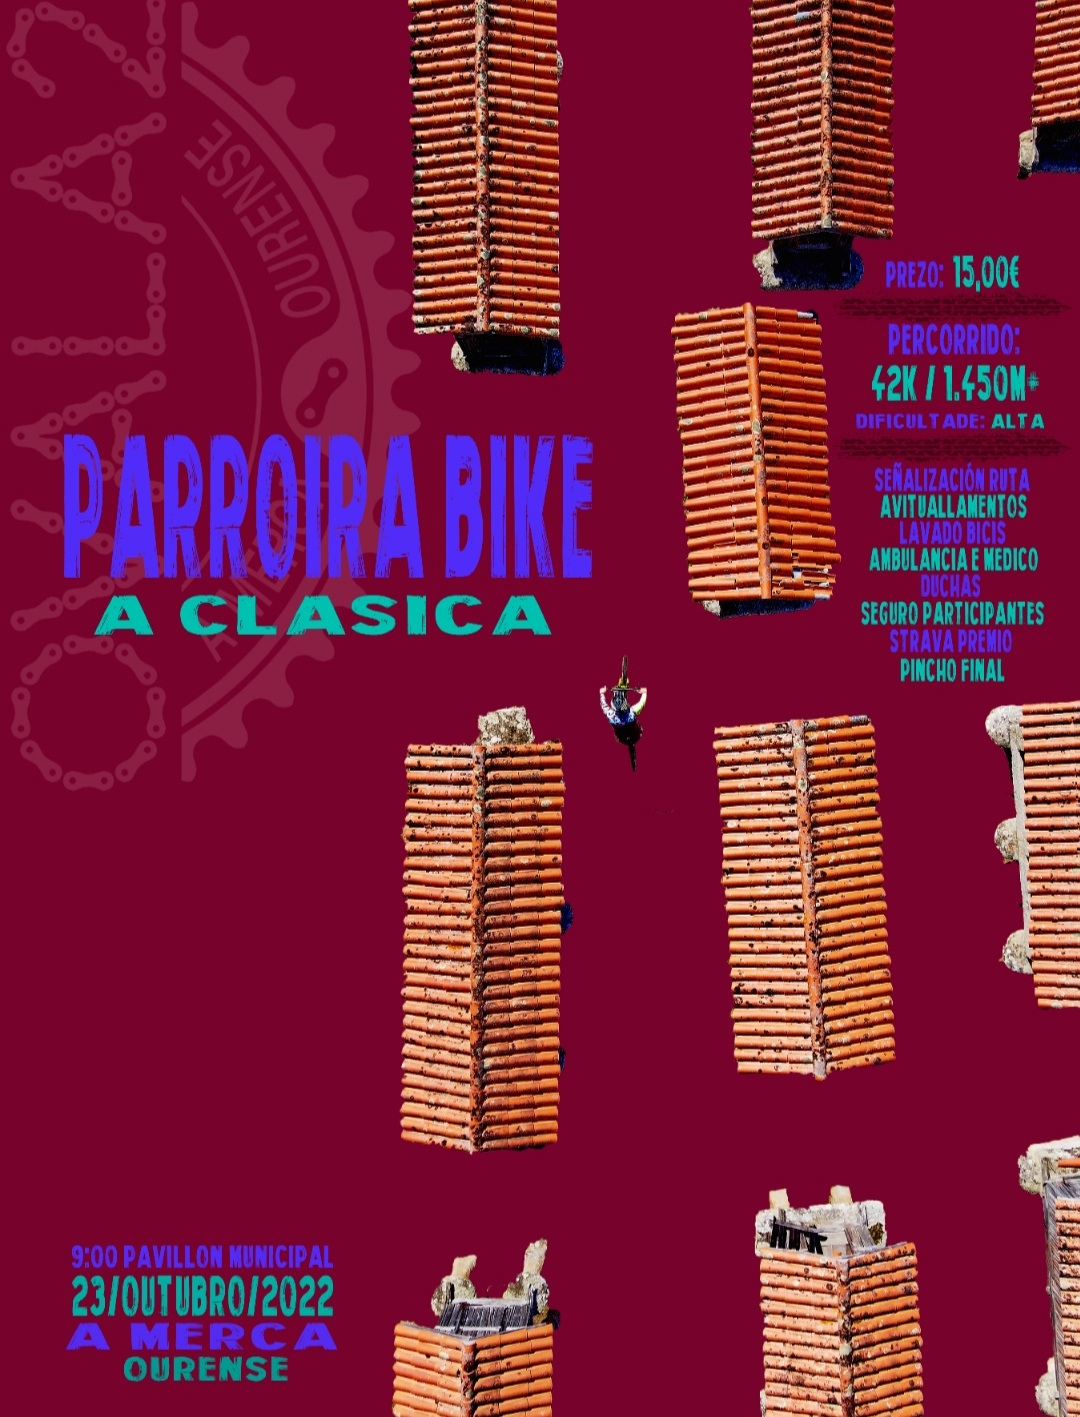 Event Poster PARROIRA-BIKE “A CLASICA” 2022